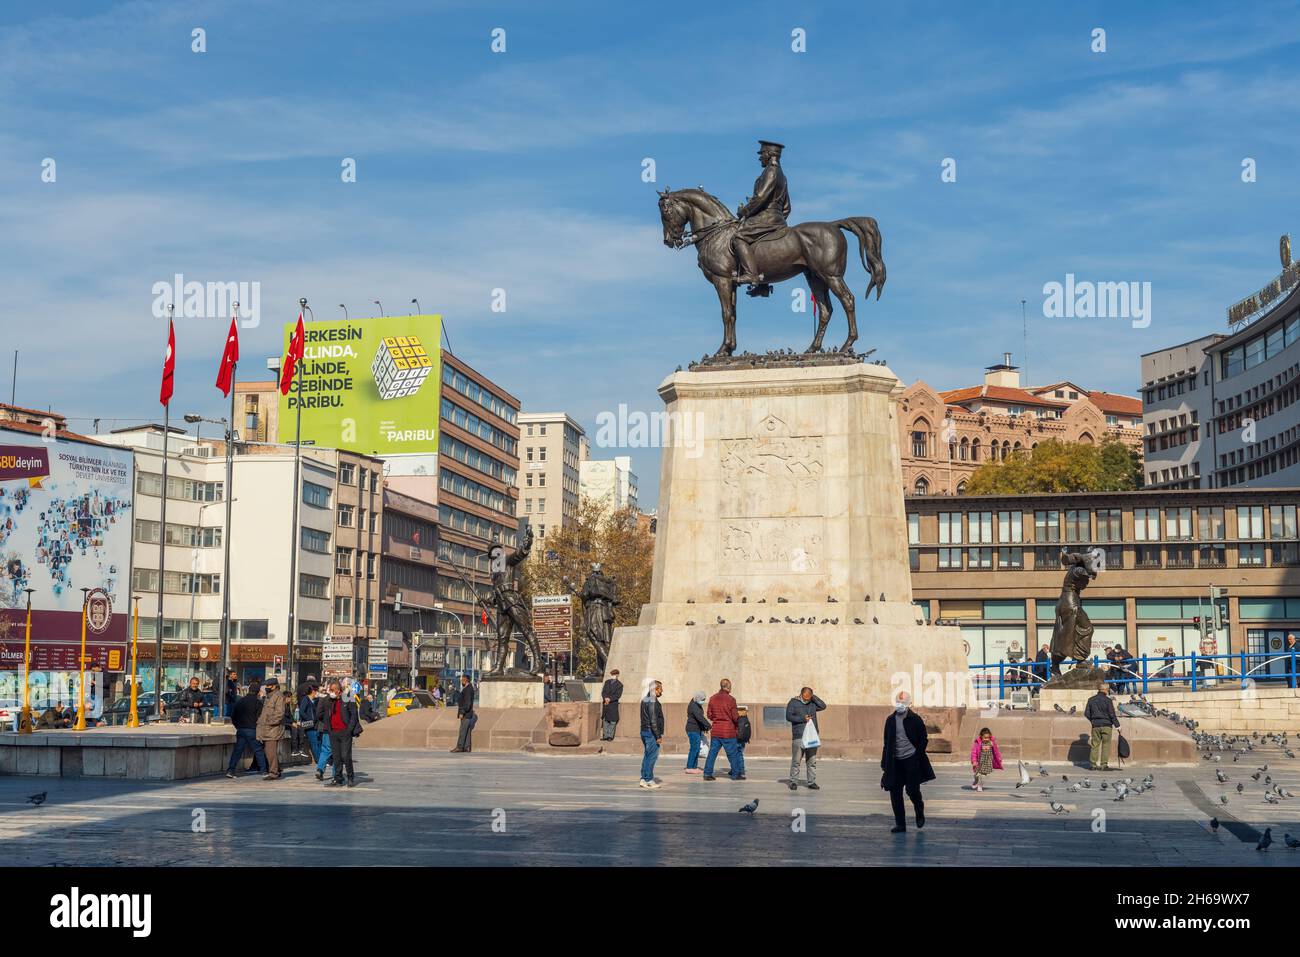 Ankara-Turkey, November 13, 2021: Victory Monument | Zafer Aniti one of the most popular iconic symbols of Ankara. Statue of Mustafa Kemal Ataturk, Tu Stock Photo